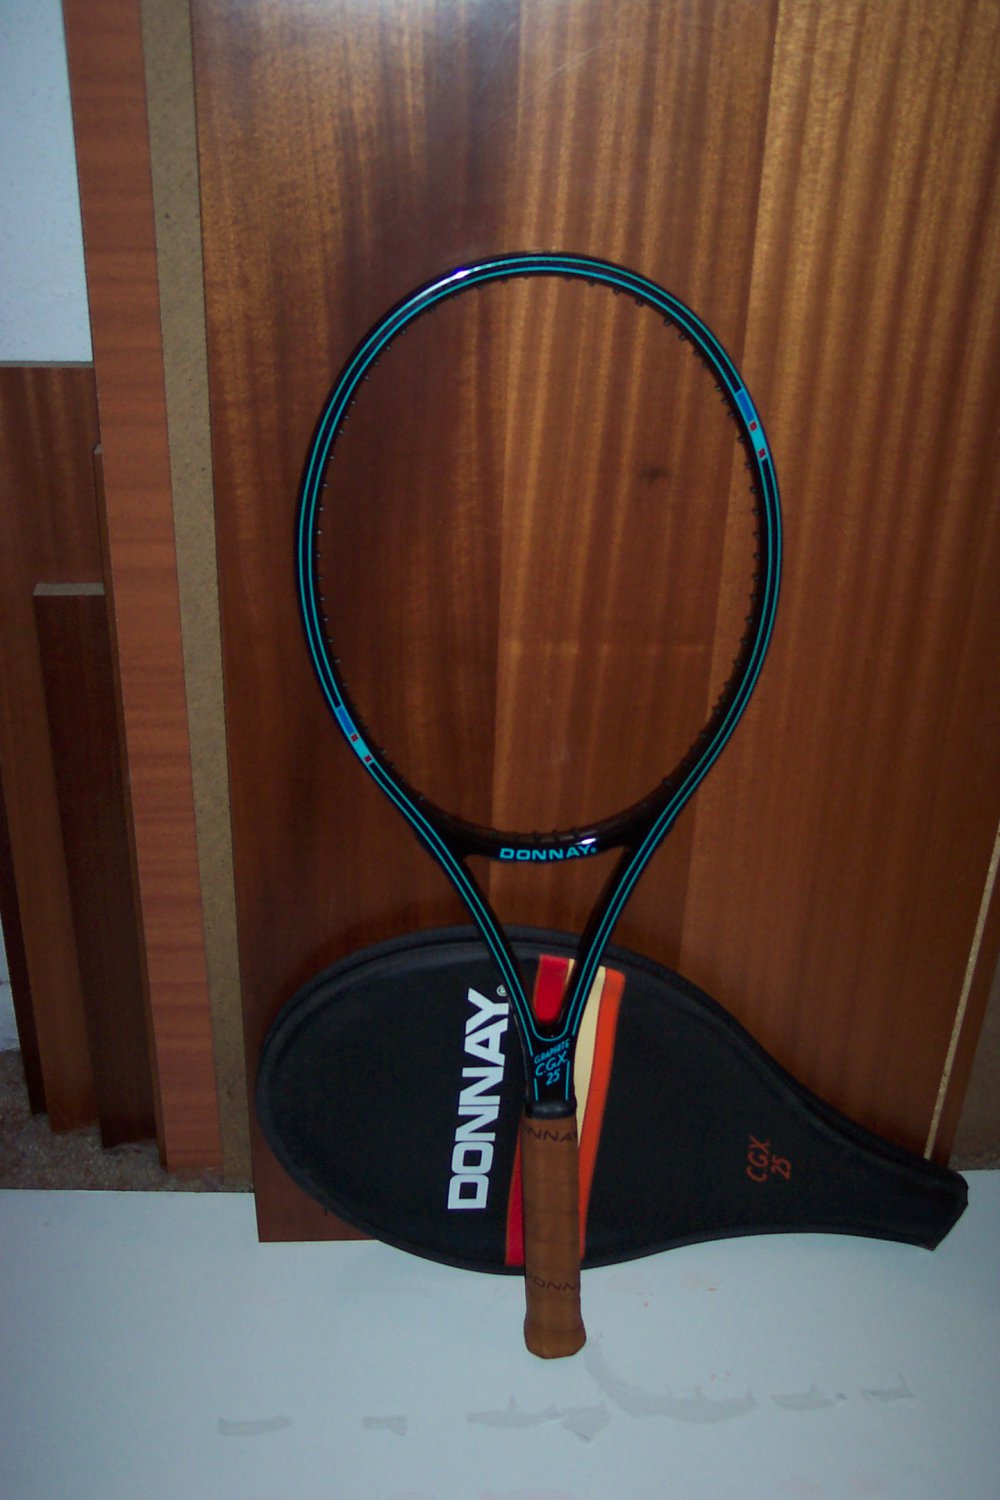 "Donnay CGX25 Tennis Racquet NEW"